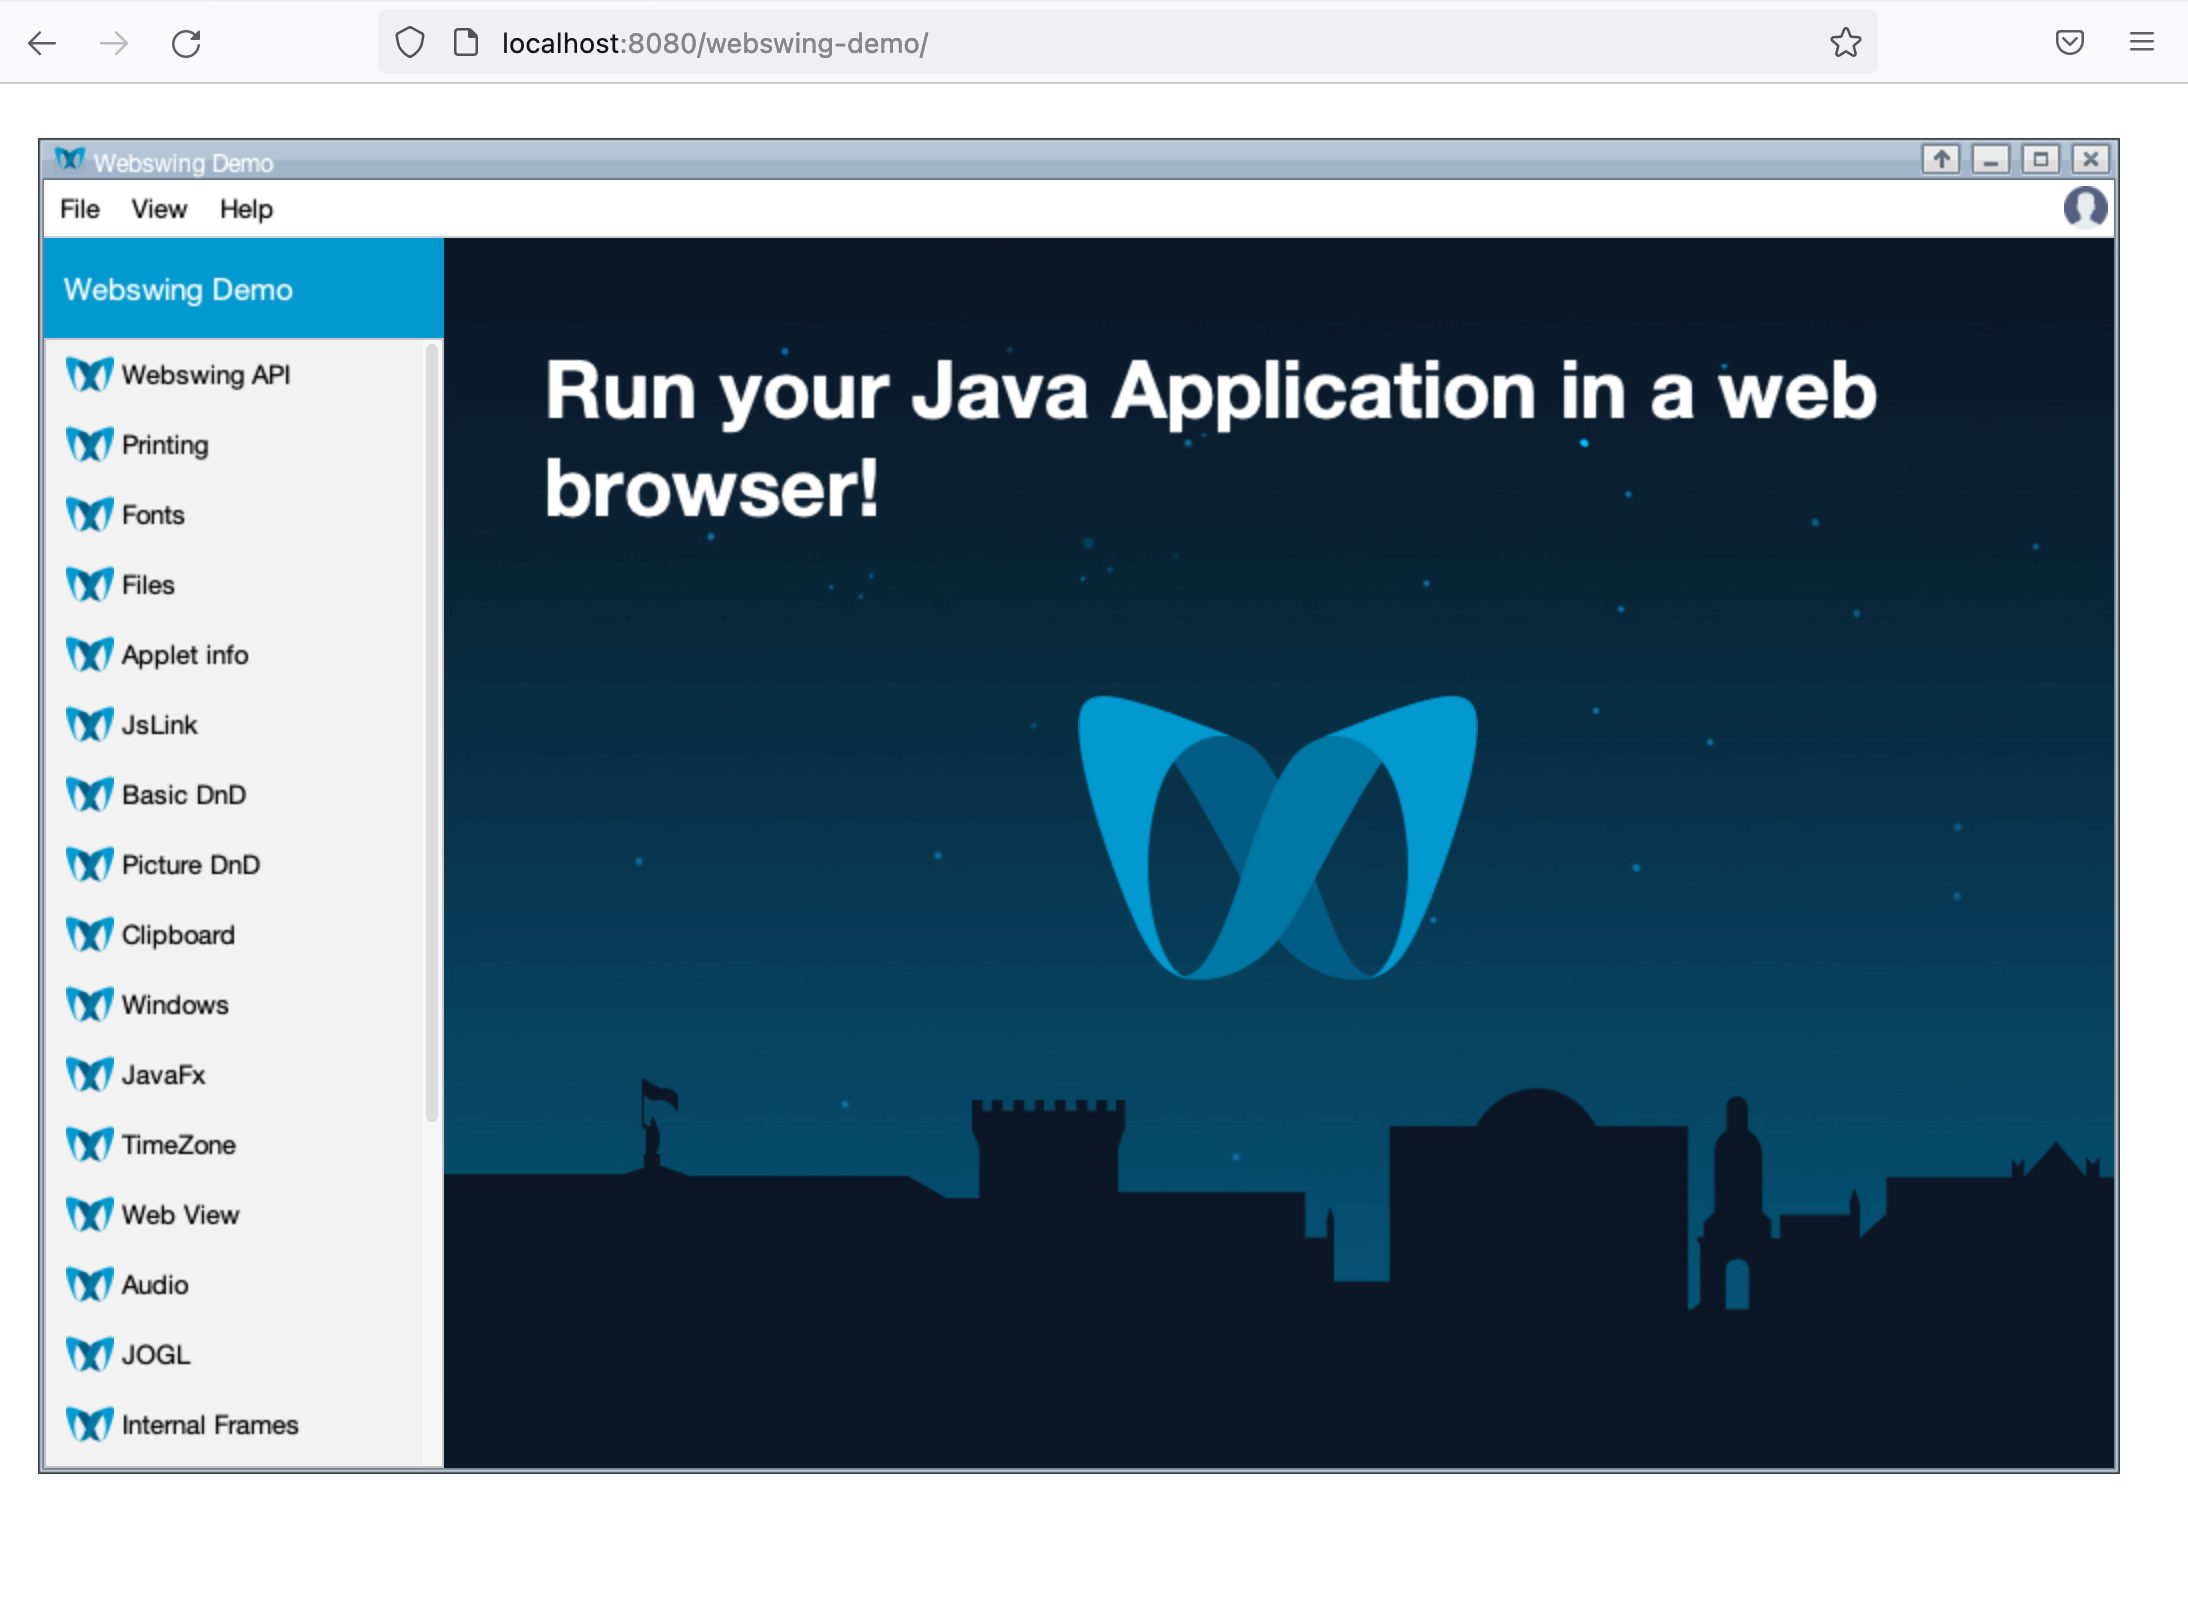 Webswing Demo running